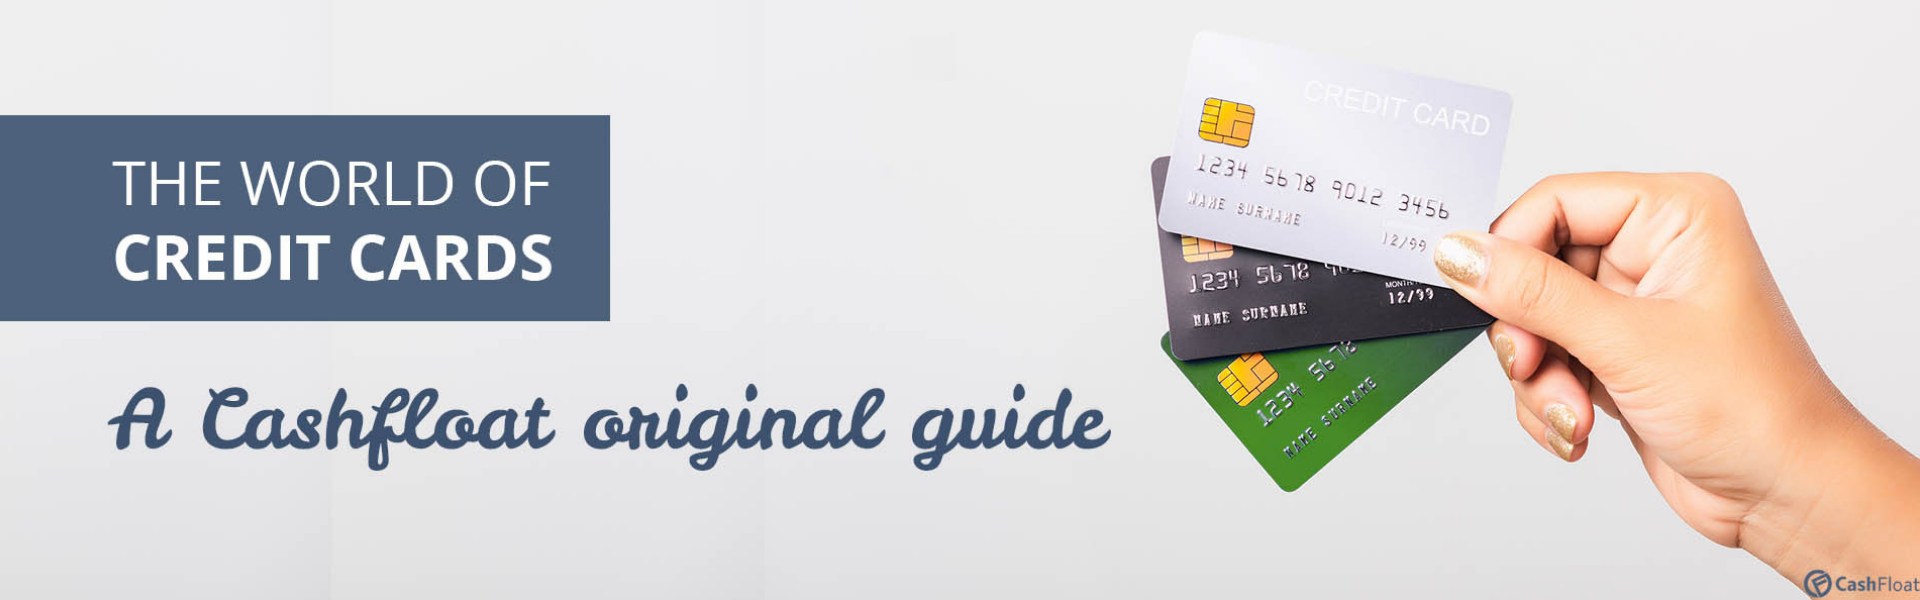 Credit Cards Guide - cashfloat